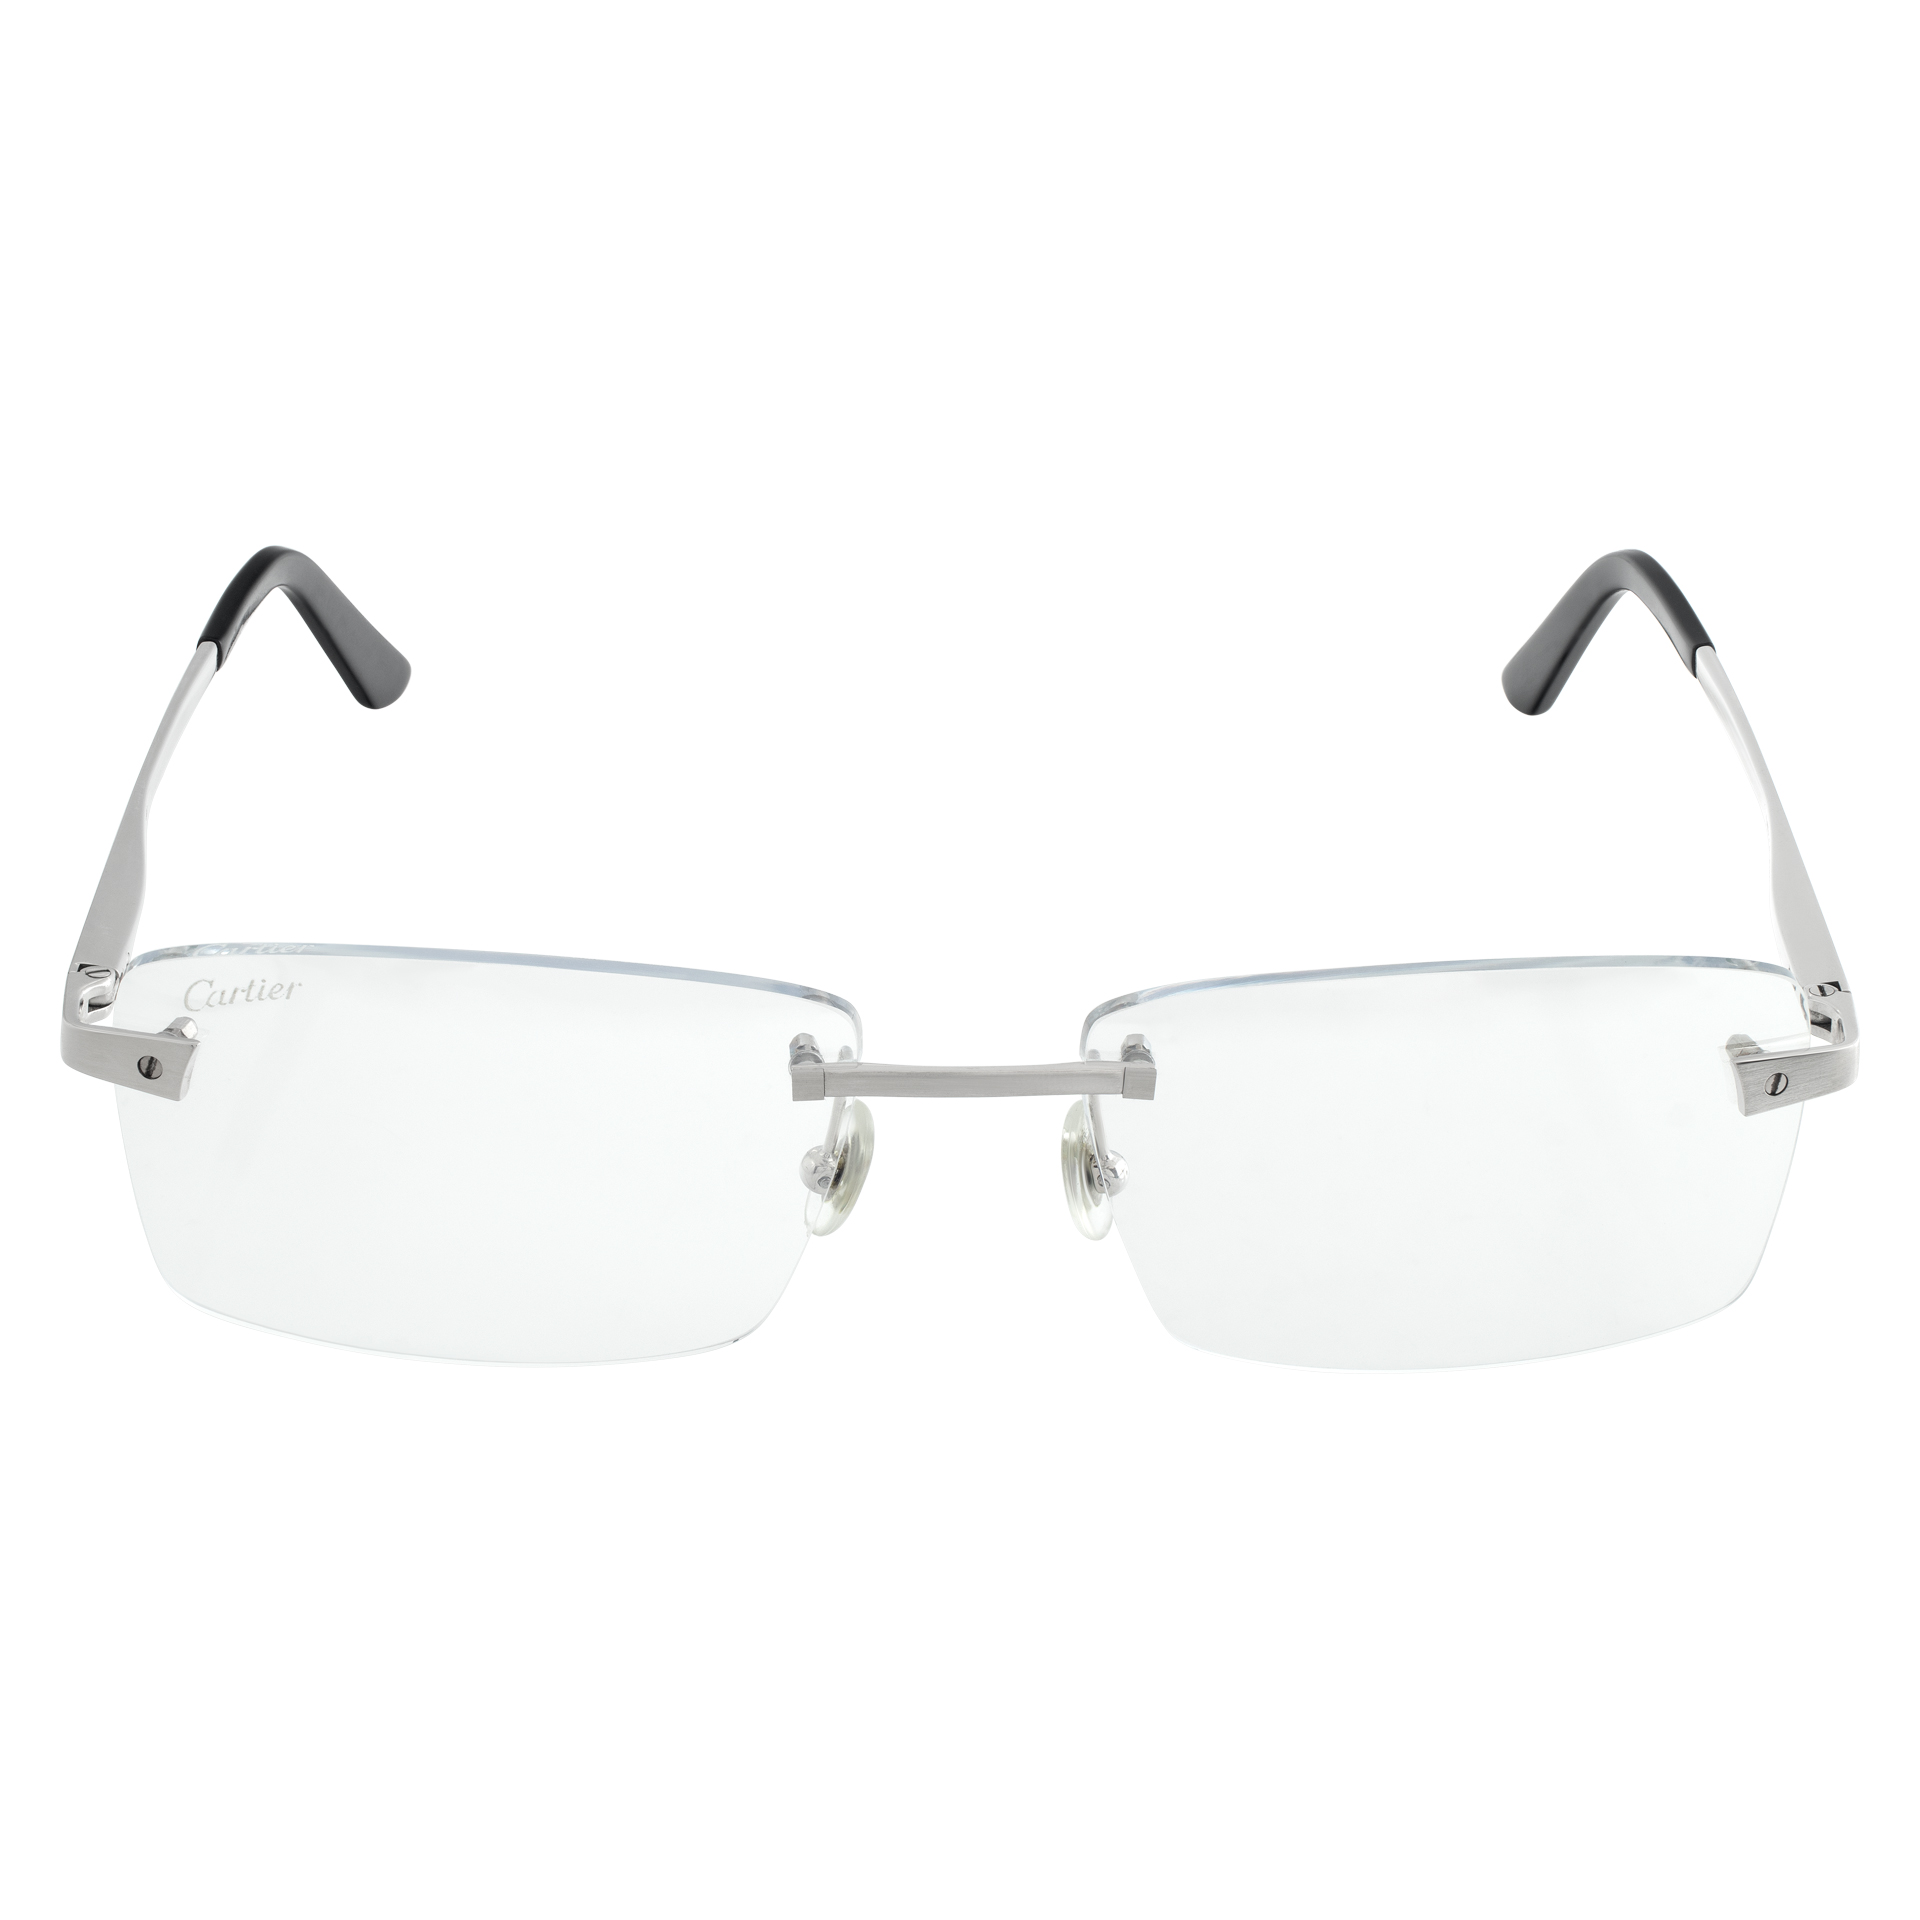 Cartier Rimless Silver Frame Glasses image 1